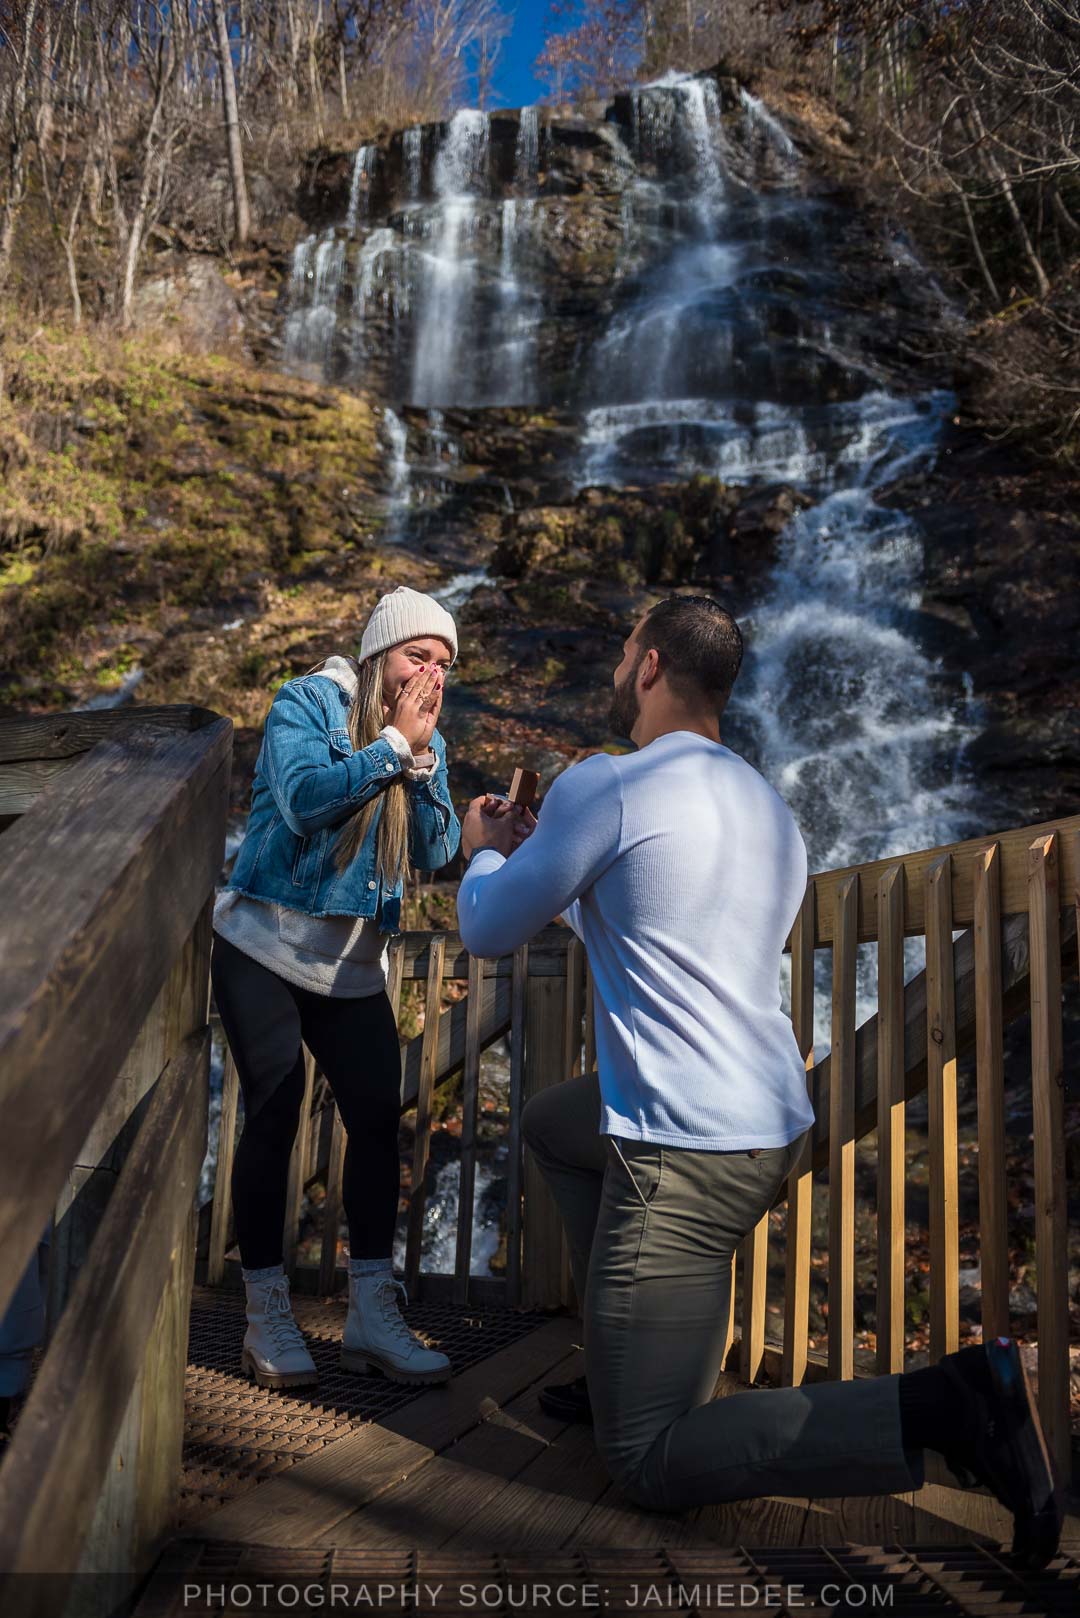 Surprise proposal and Engagement Photos taken at Amicalola Falls in Dawsonville, GA – Dawson County.